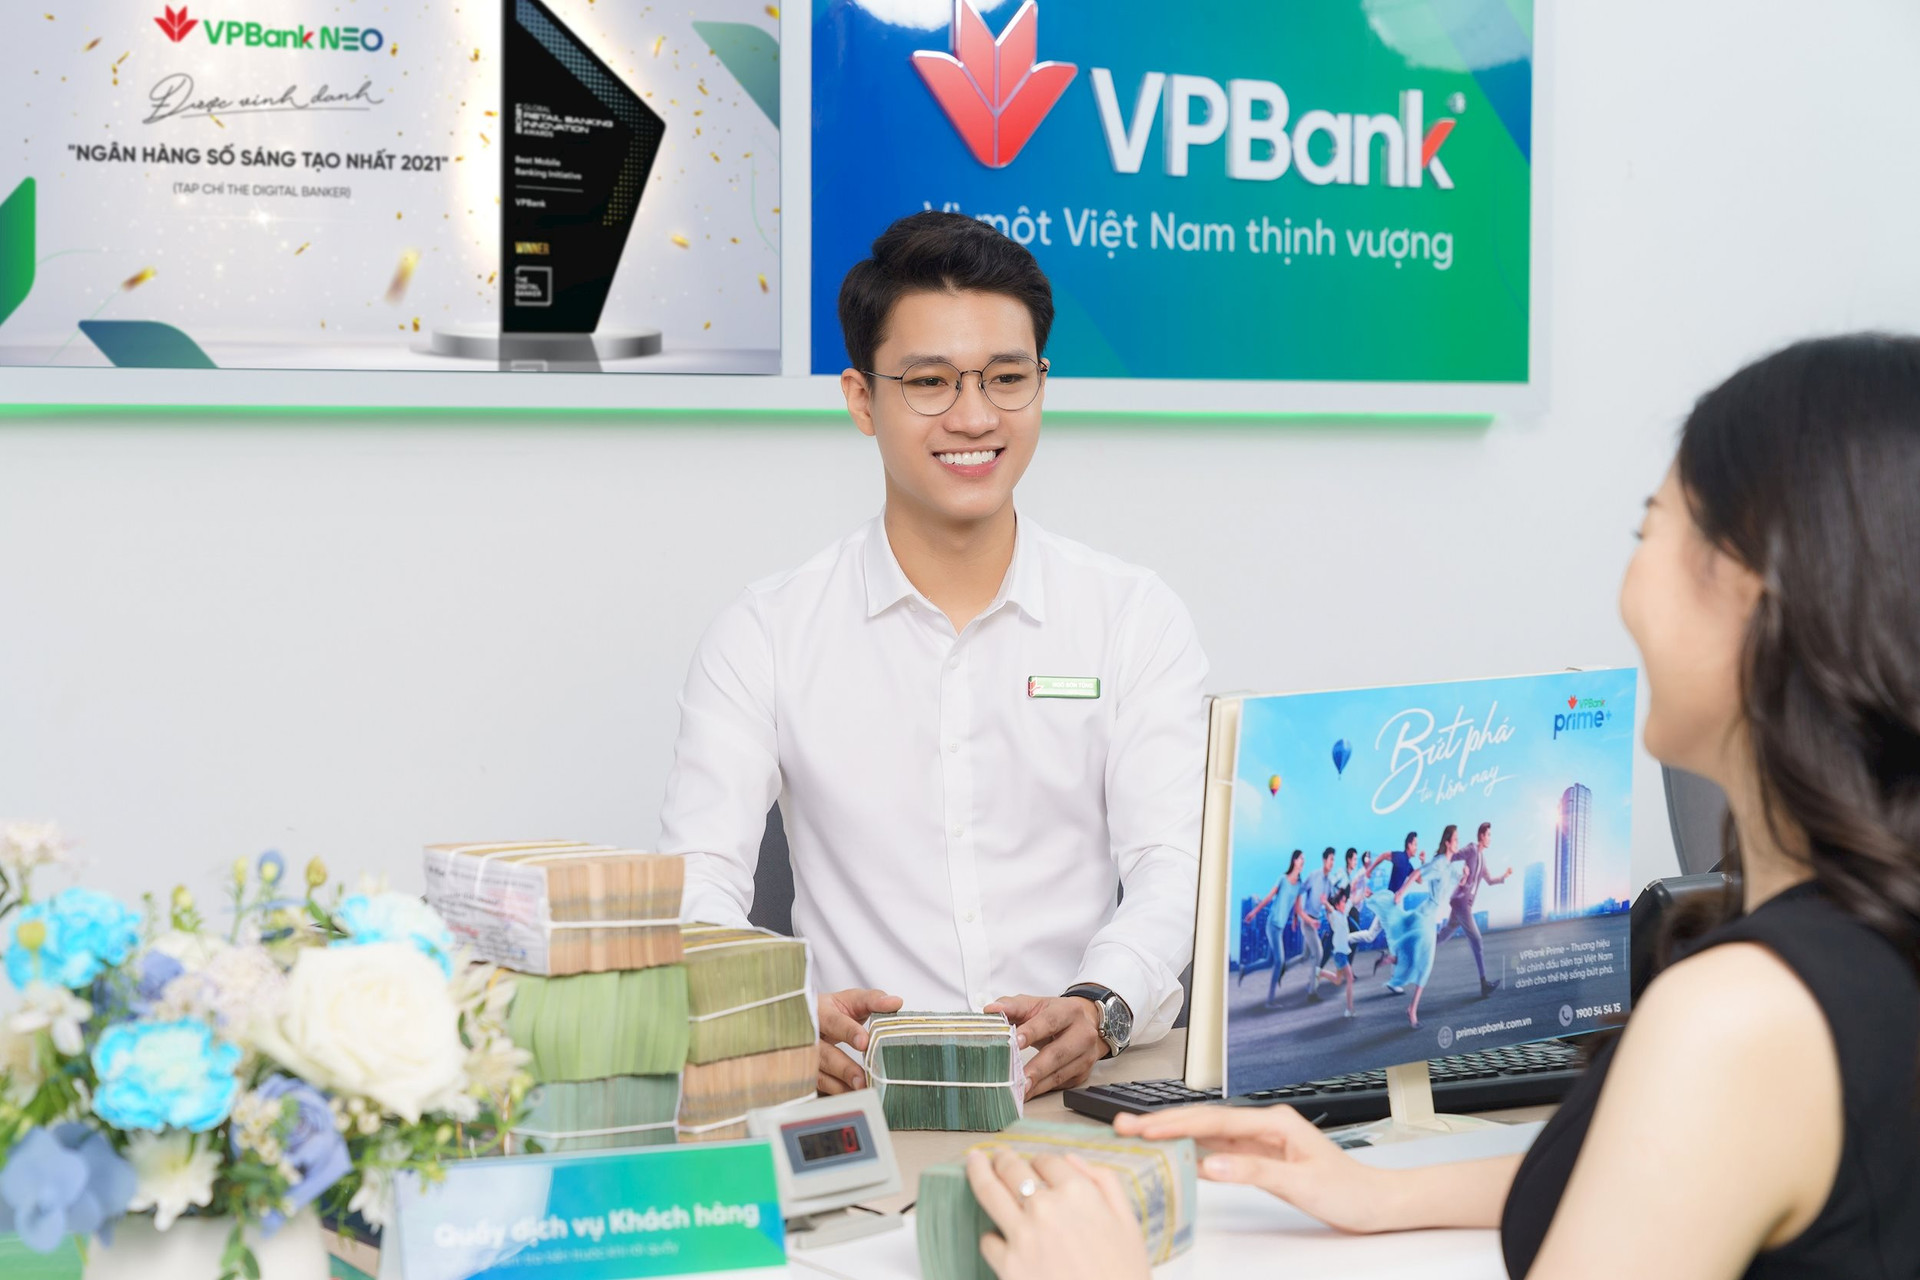 vpbank-dat-ket-qua-kinh-doanh-tot-nam-2021-1-.jpg